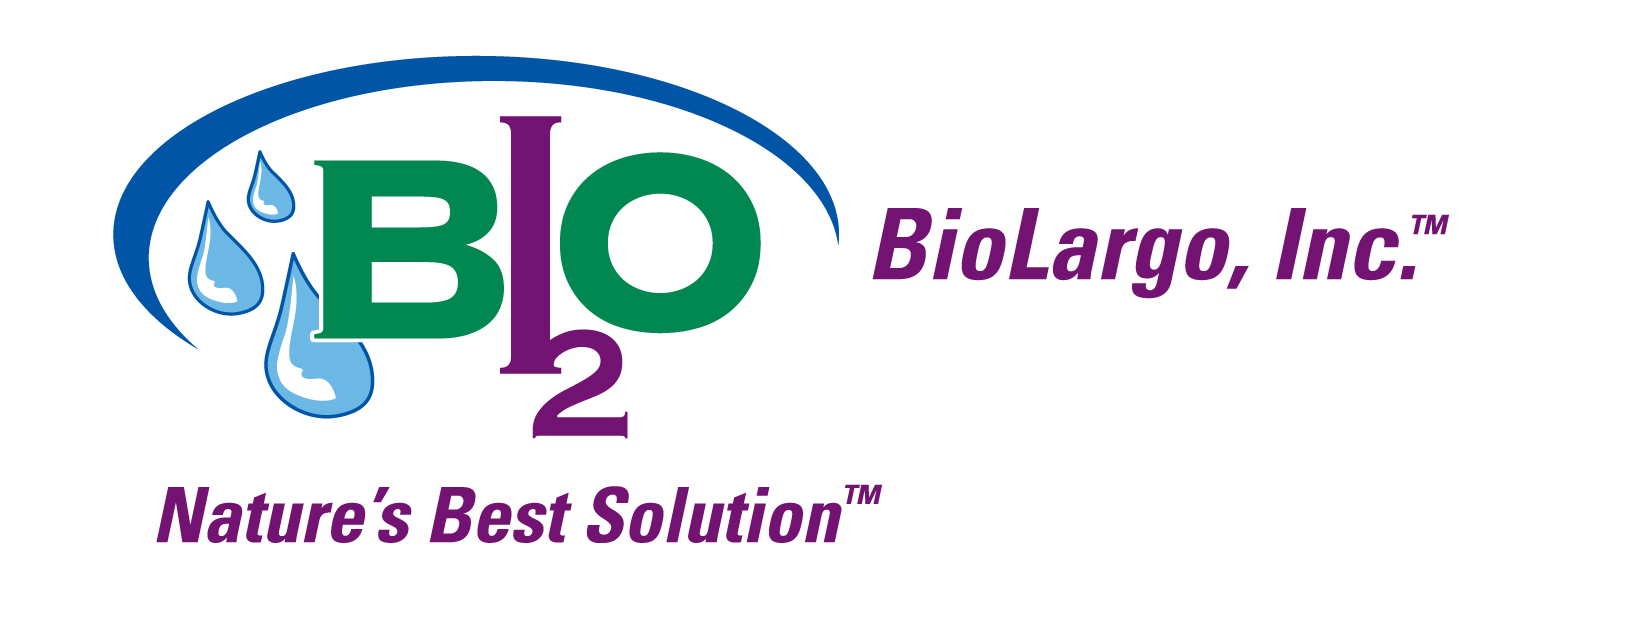 BioLargo, Inc. Logo